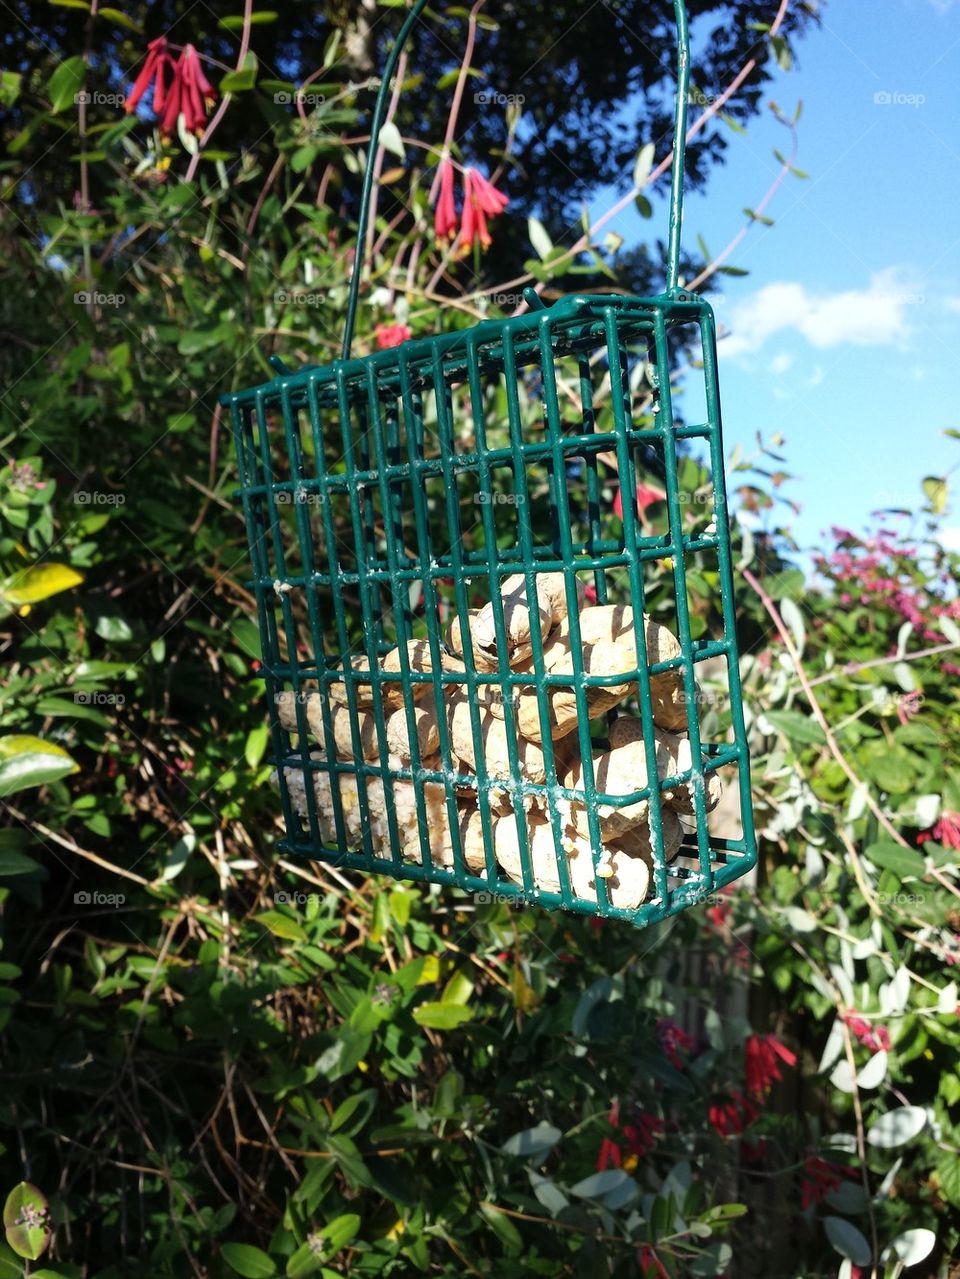 peanuts in bird feeder 